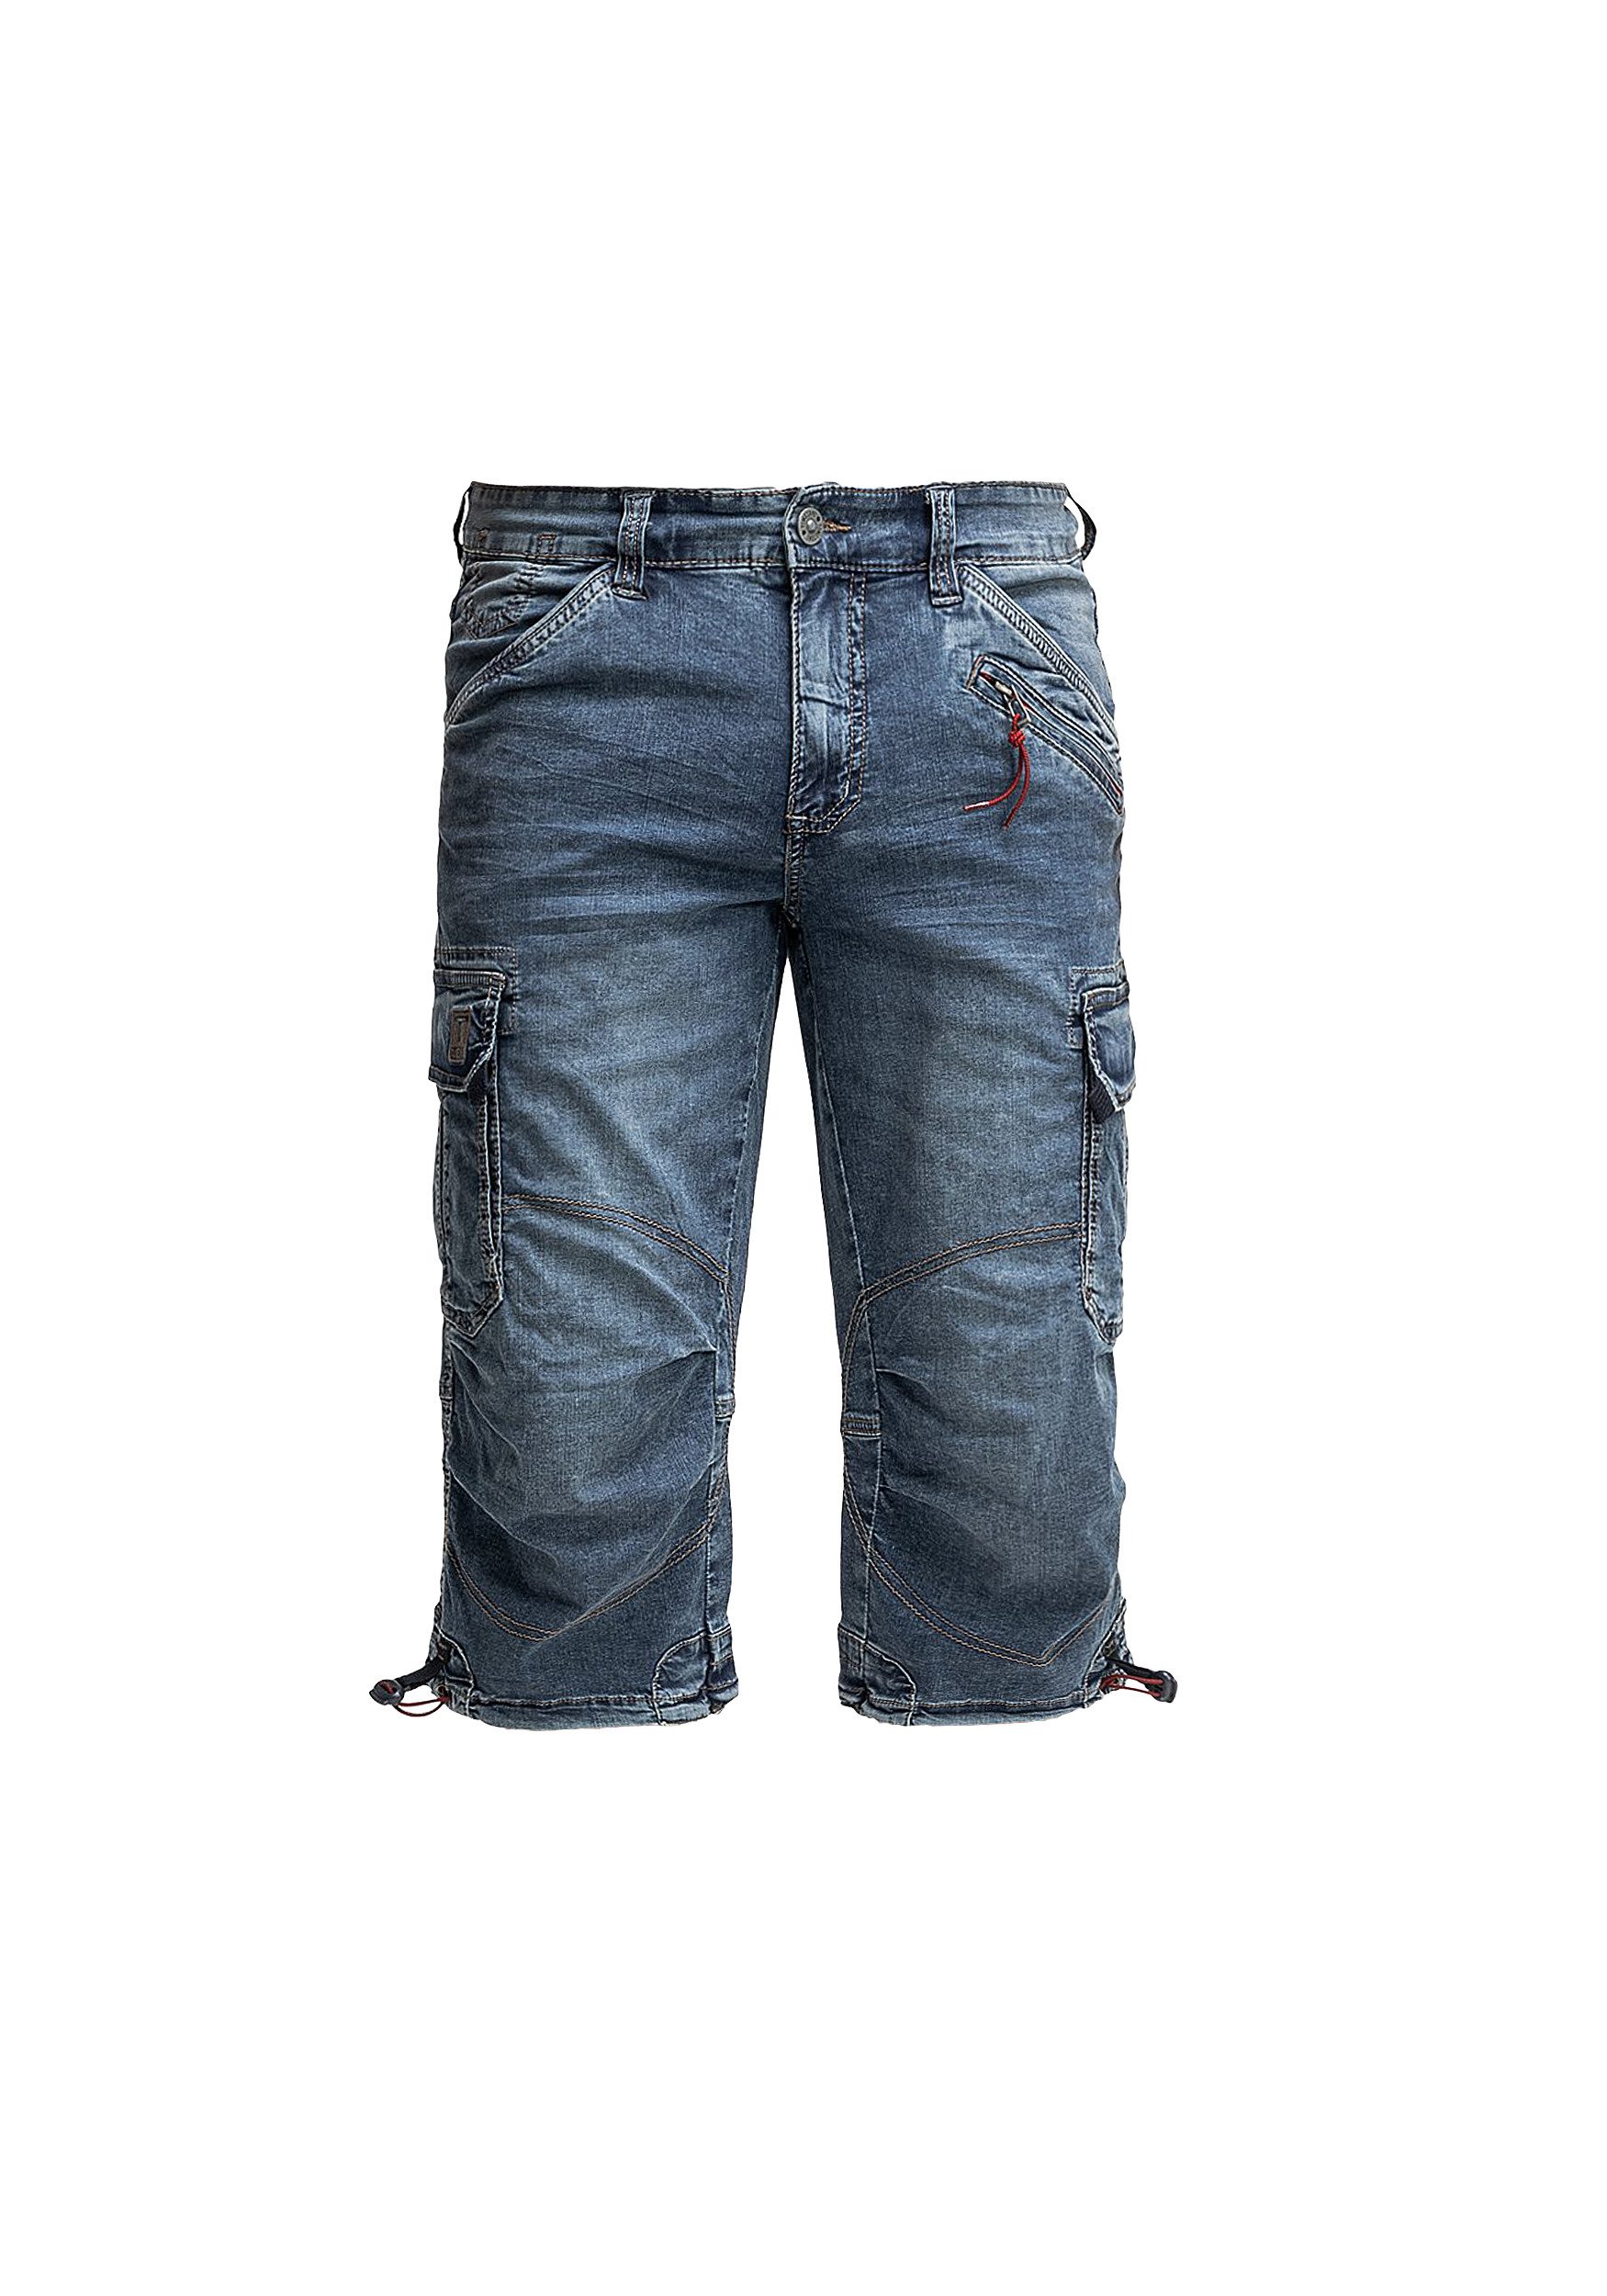 TIMEZONE Jeansshorts Shorts 3/4 Denim Pants loose Fit Mid Waist Jeansshorts 7312 in Blau